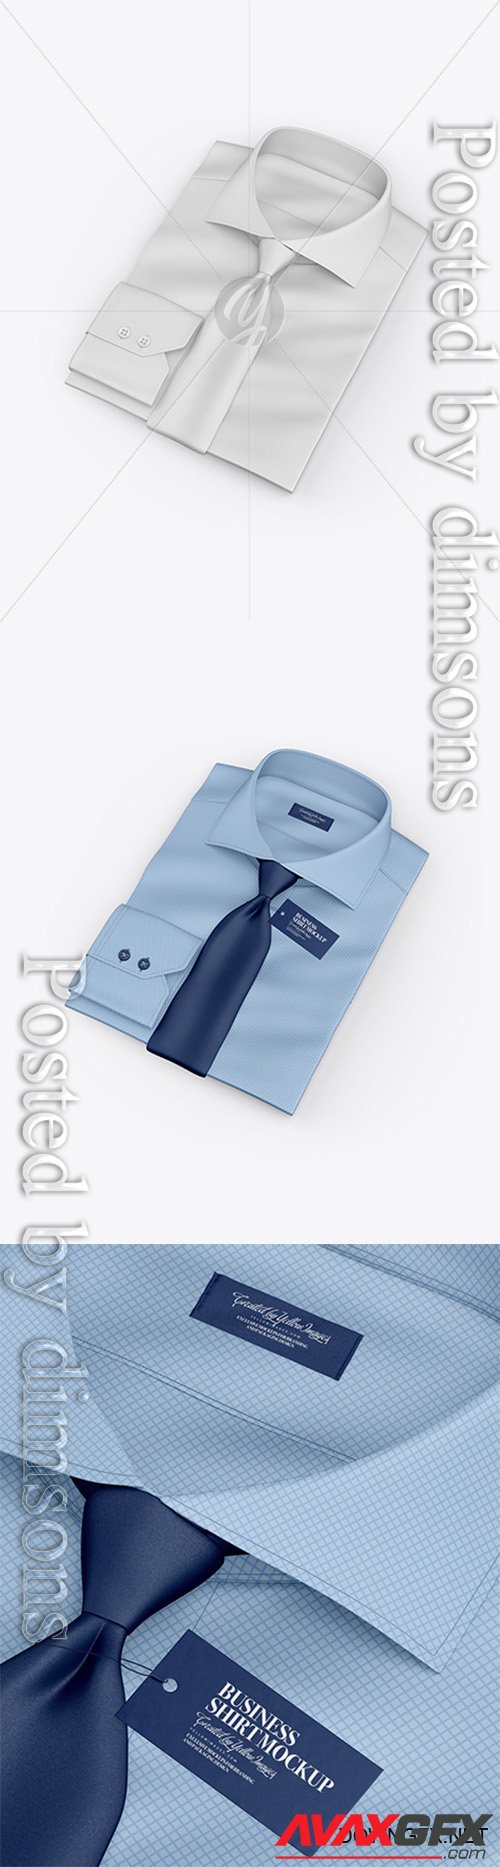 Folded Shirt With Tie Mockup - Half Side View (High-Angle Shot) 25072 Layered TIF